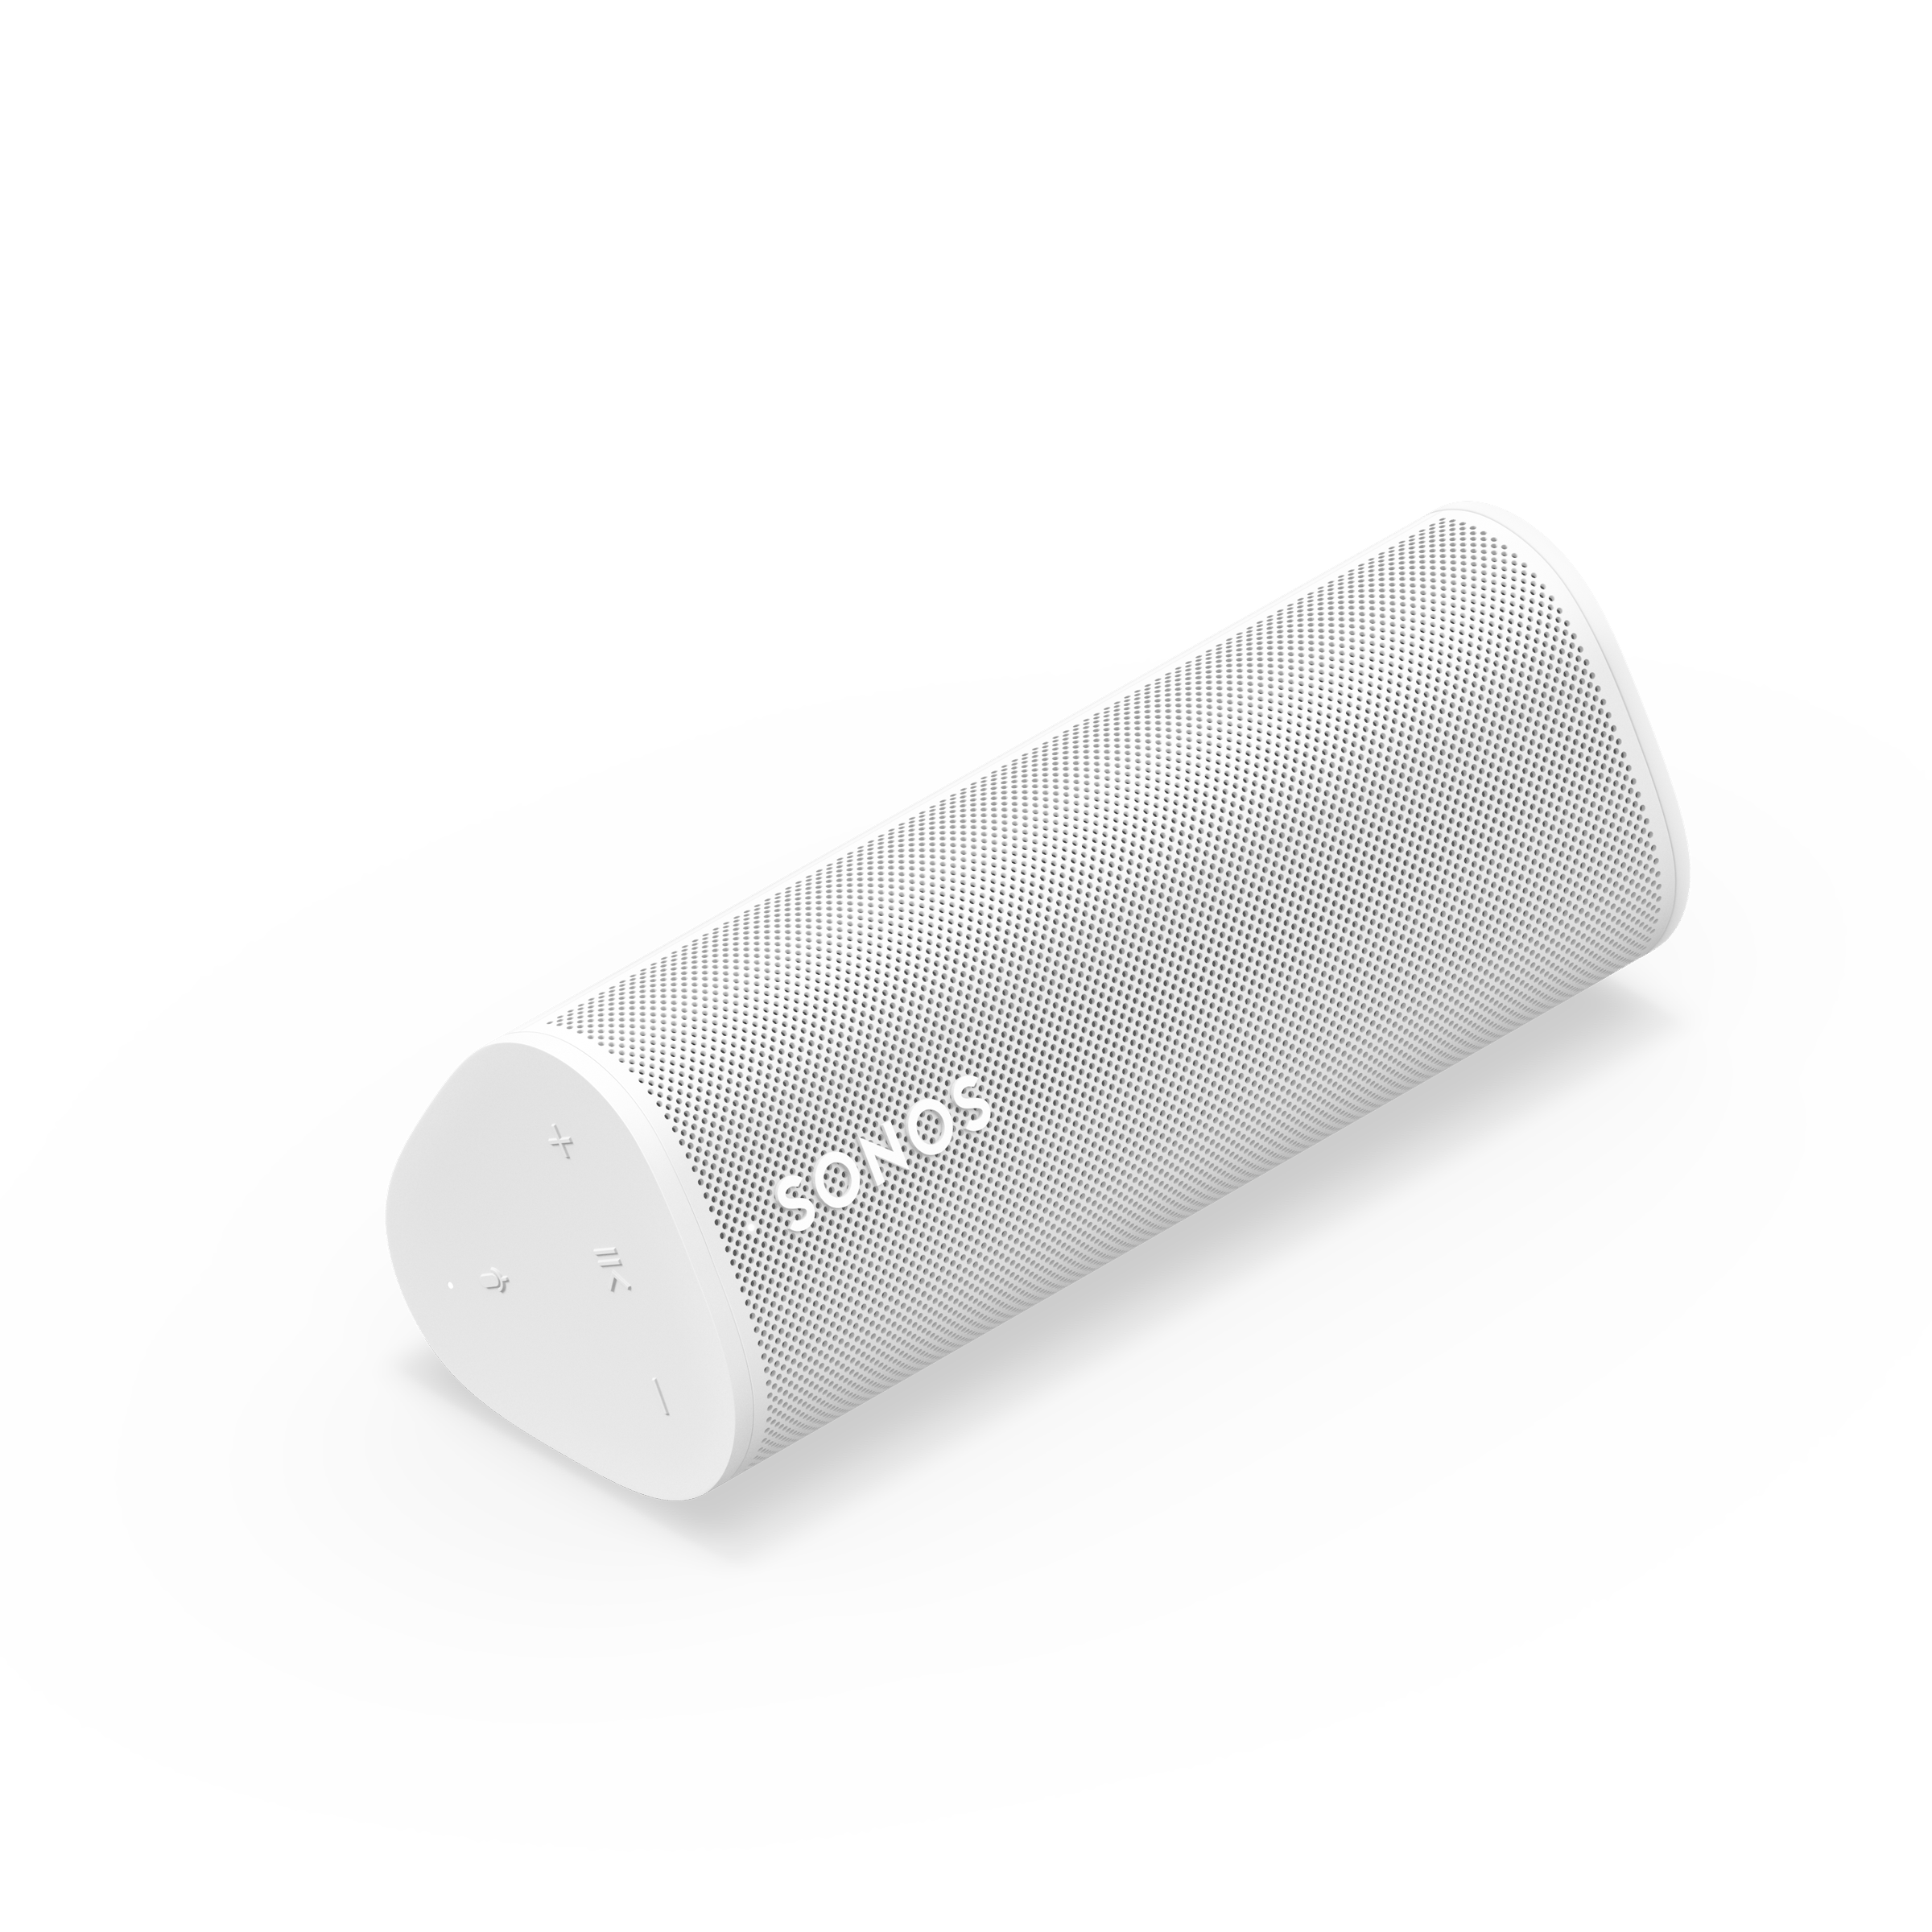 Roam 2: Portable Waterproof Bluetooth Speaker | Sonos